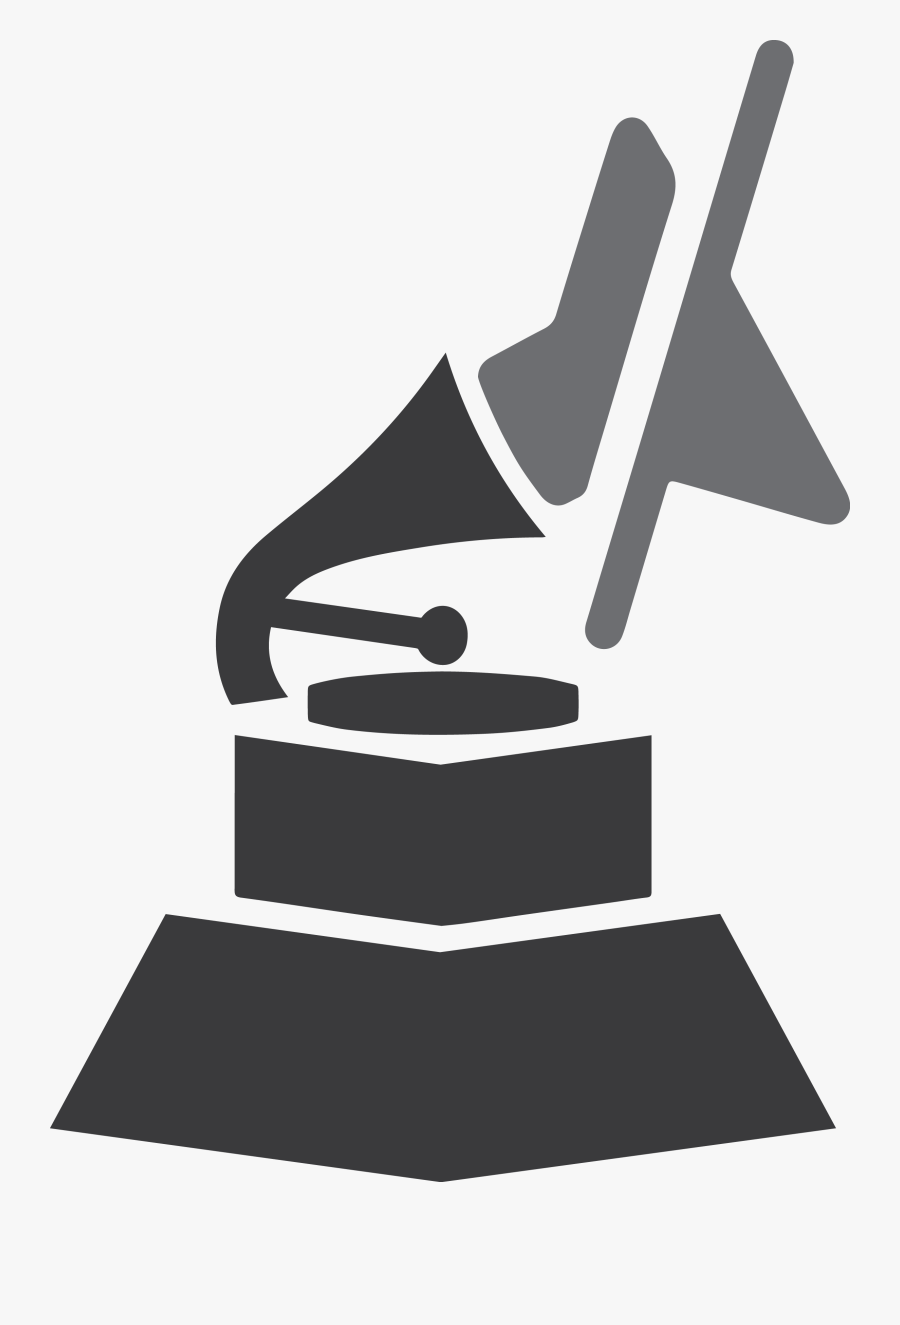 Grammy Awards Clipart, Transparent Clipart